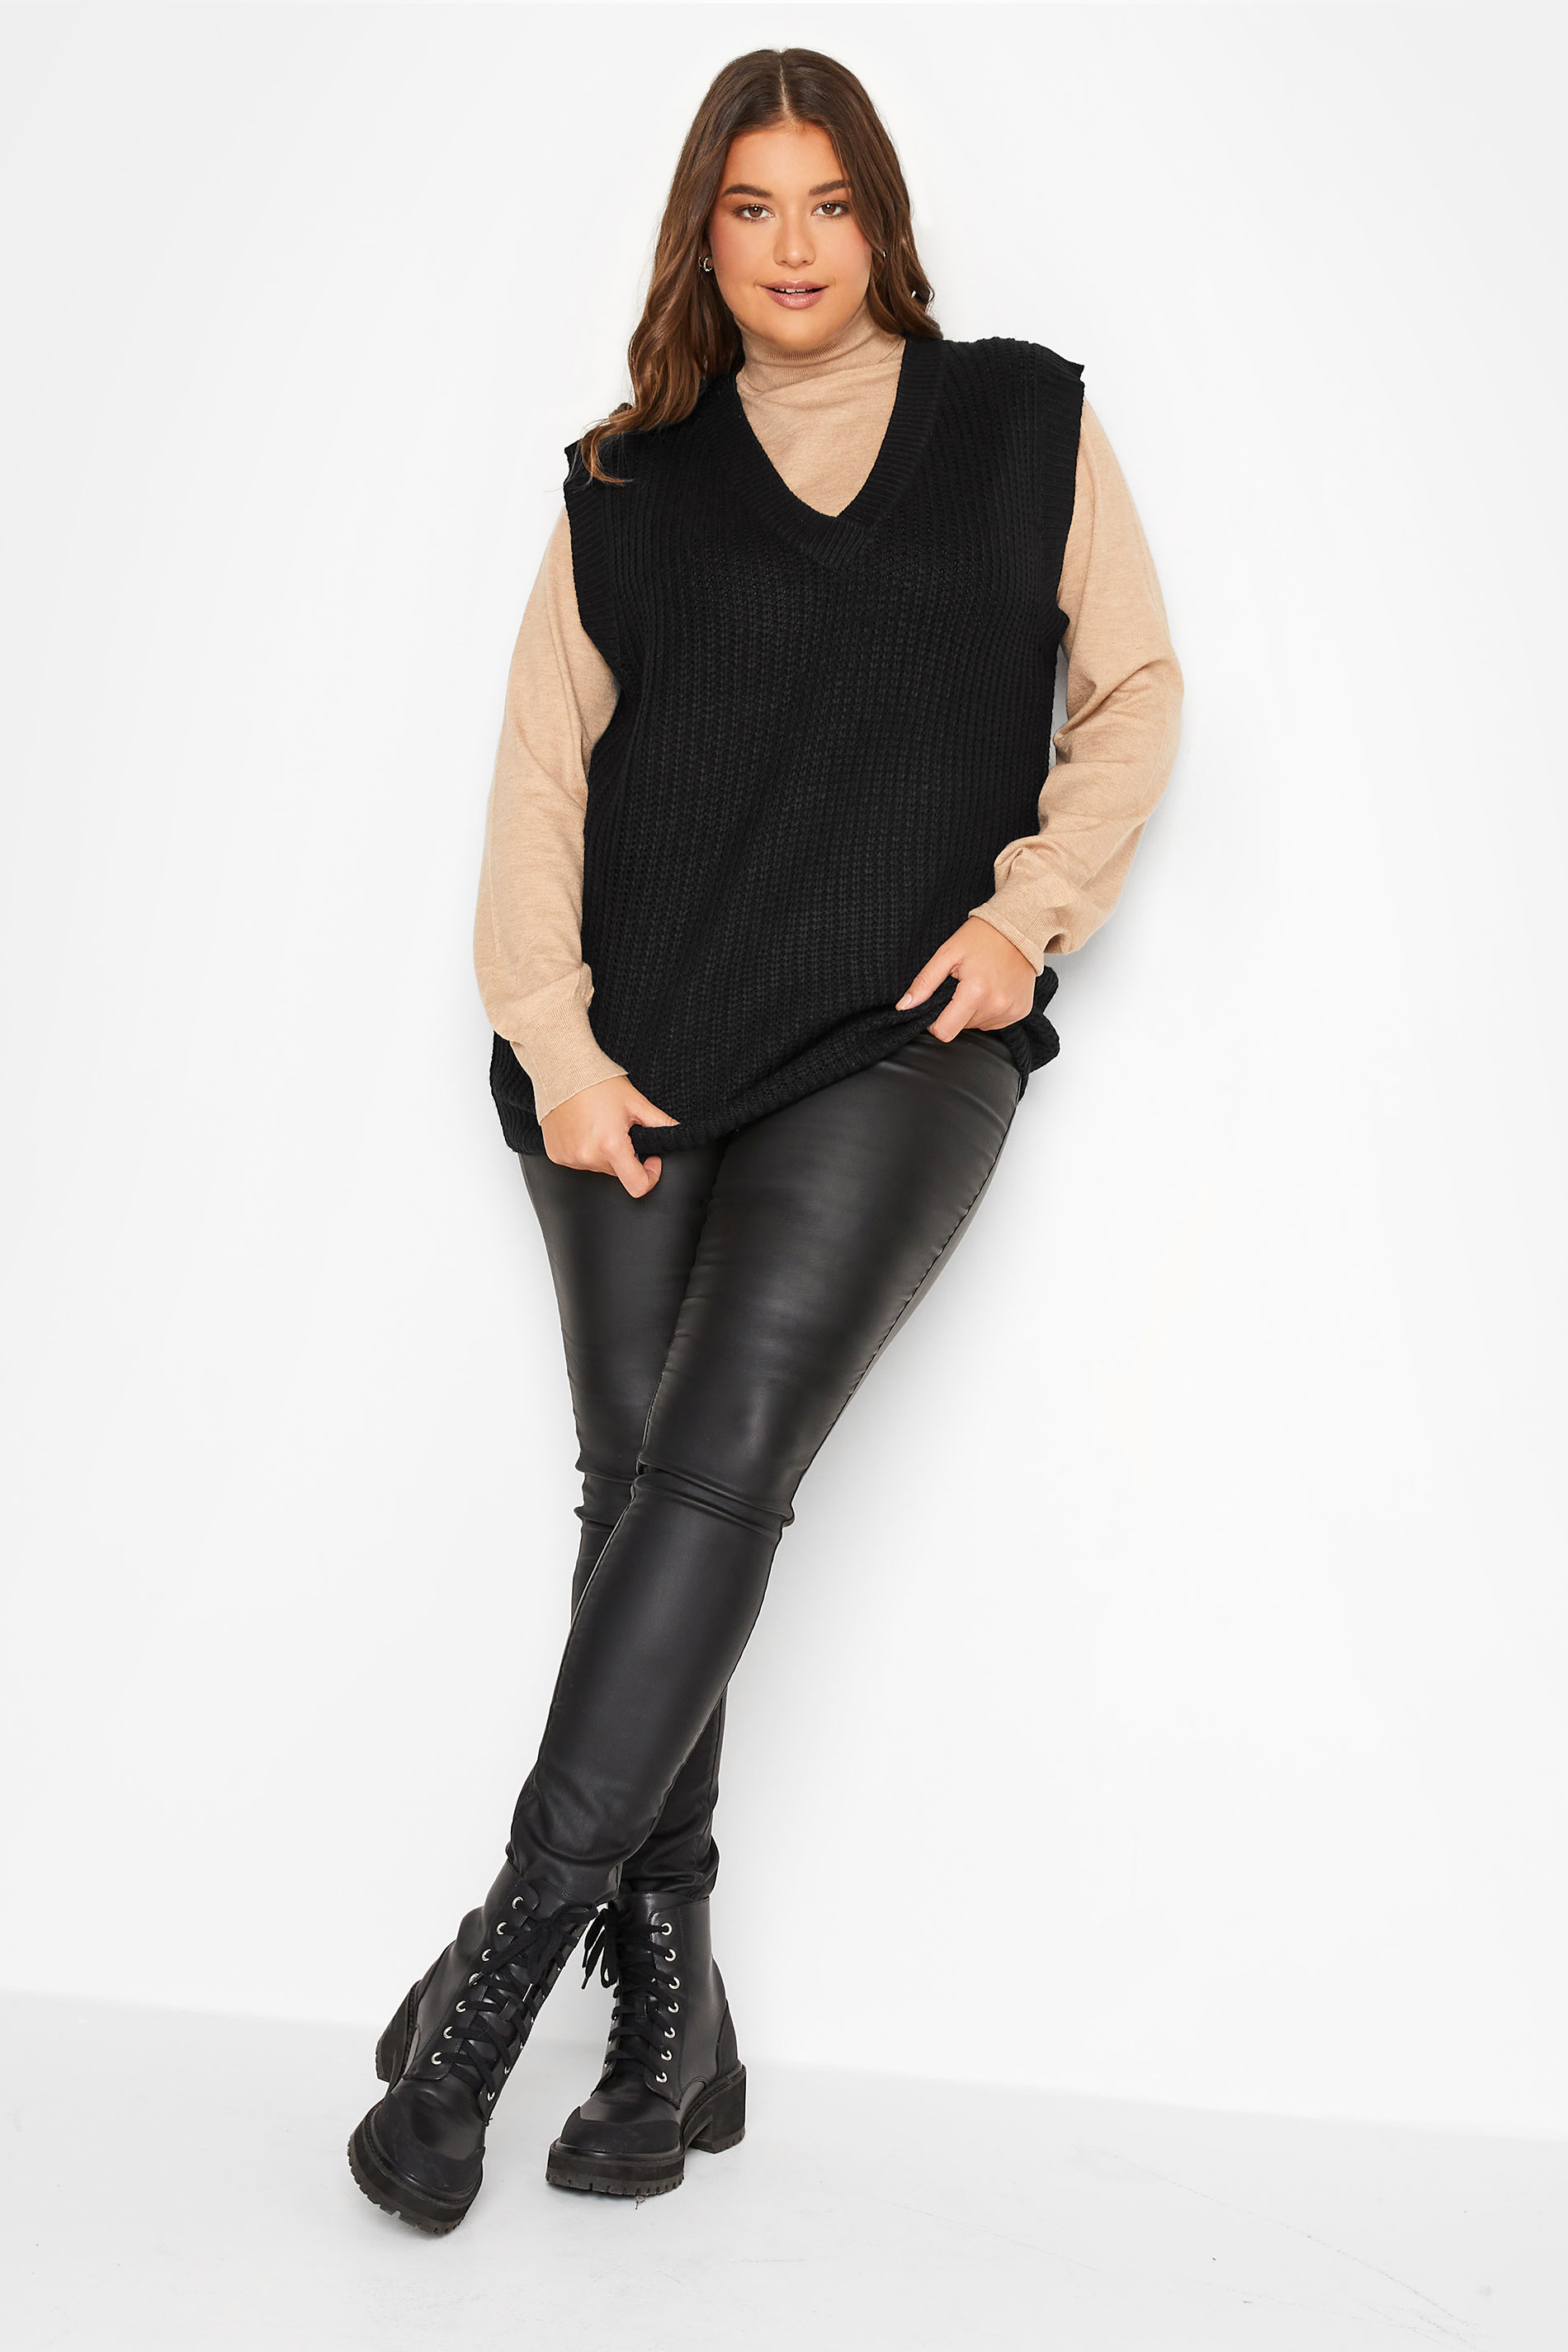 LTS Tall Women's Black Knitted Sleeveless Vest | Long Tall Sally  2